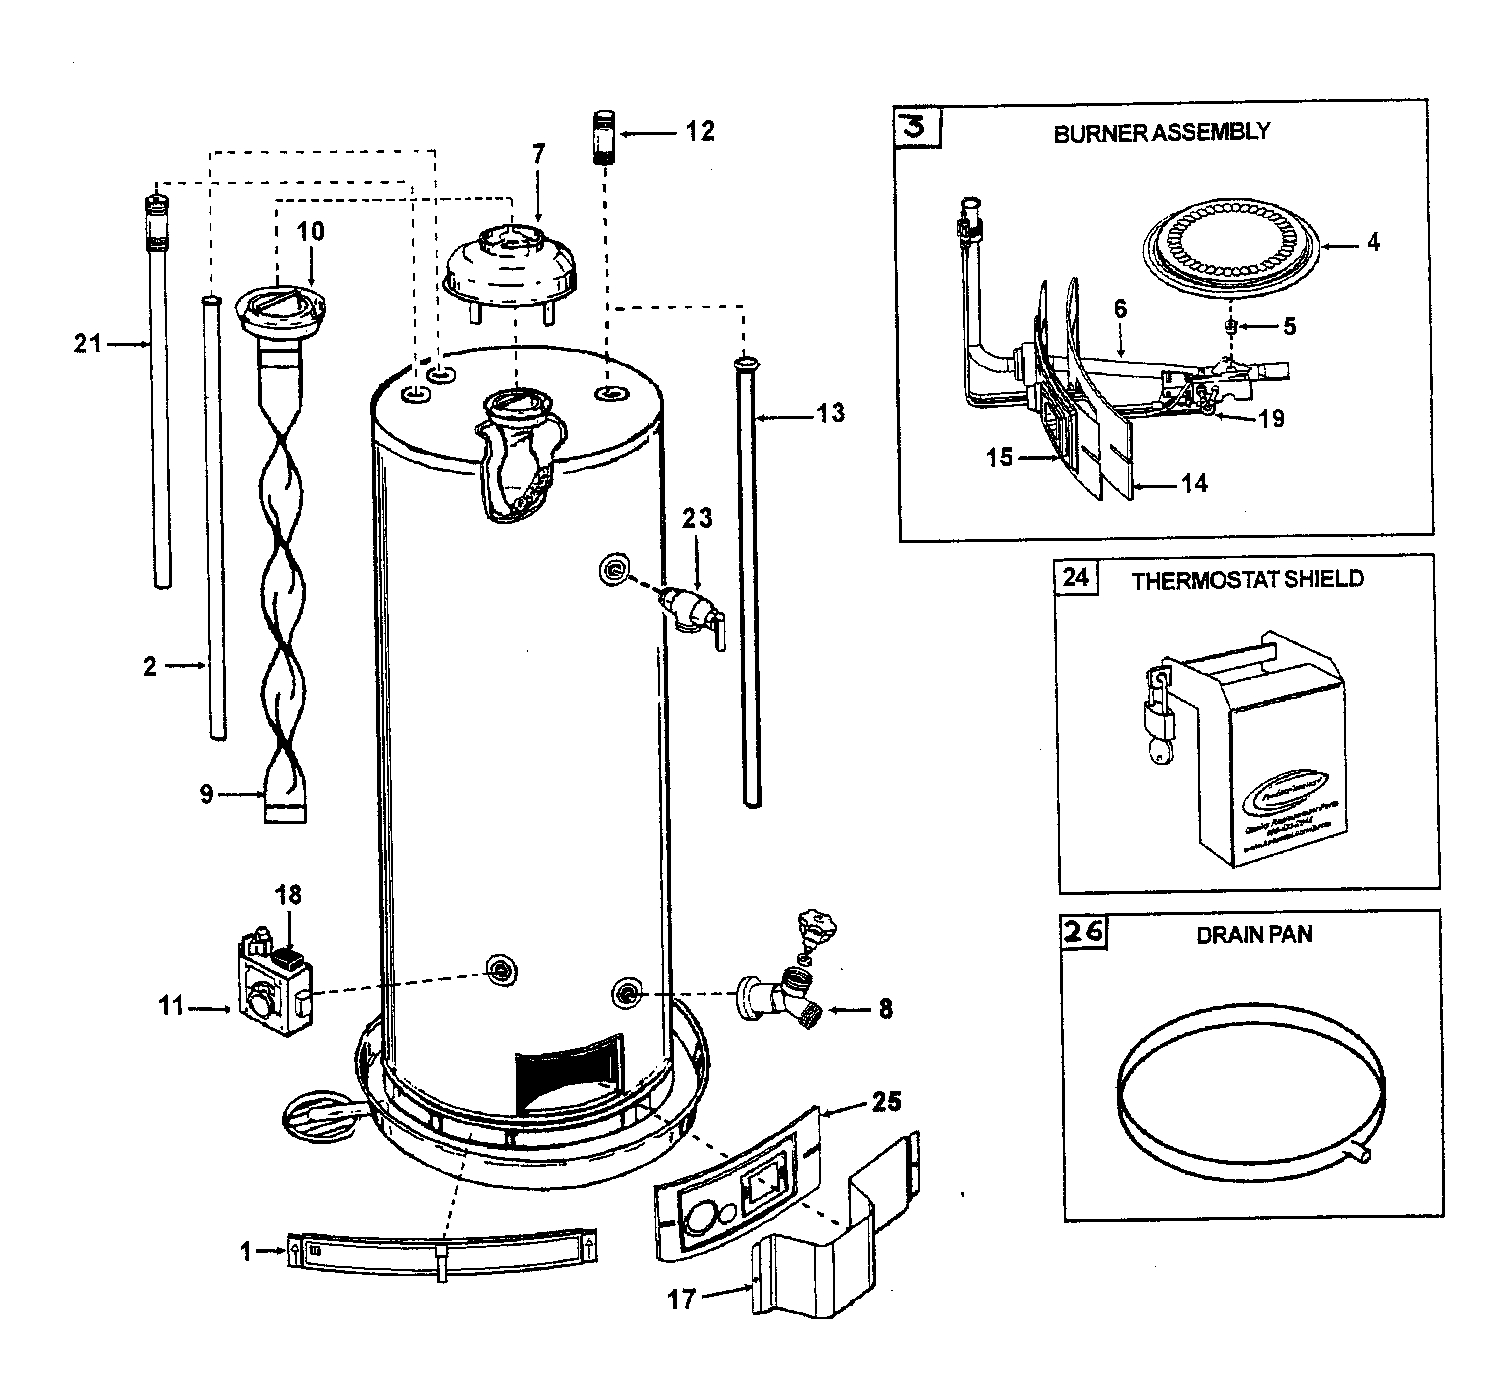 Water Heater Parts Diagram Gas Hot Water Heater Parts Diagram Burner Today Wiring Schematic